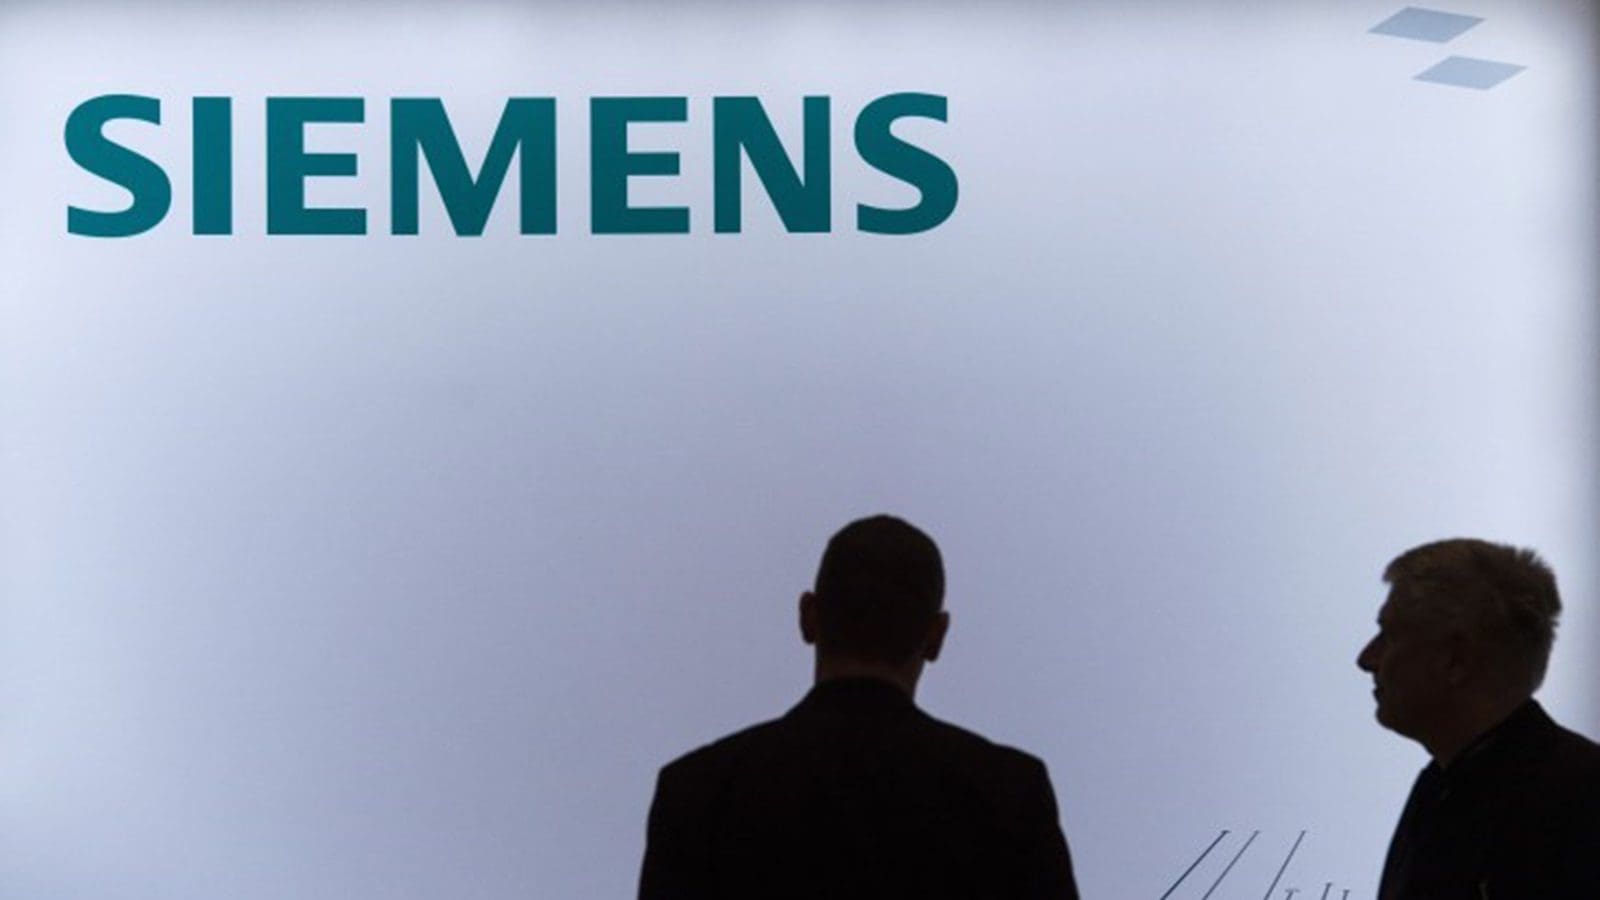 Siemens' Footprint in the Middle East